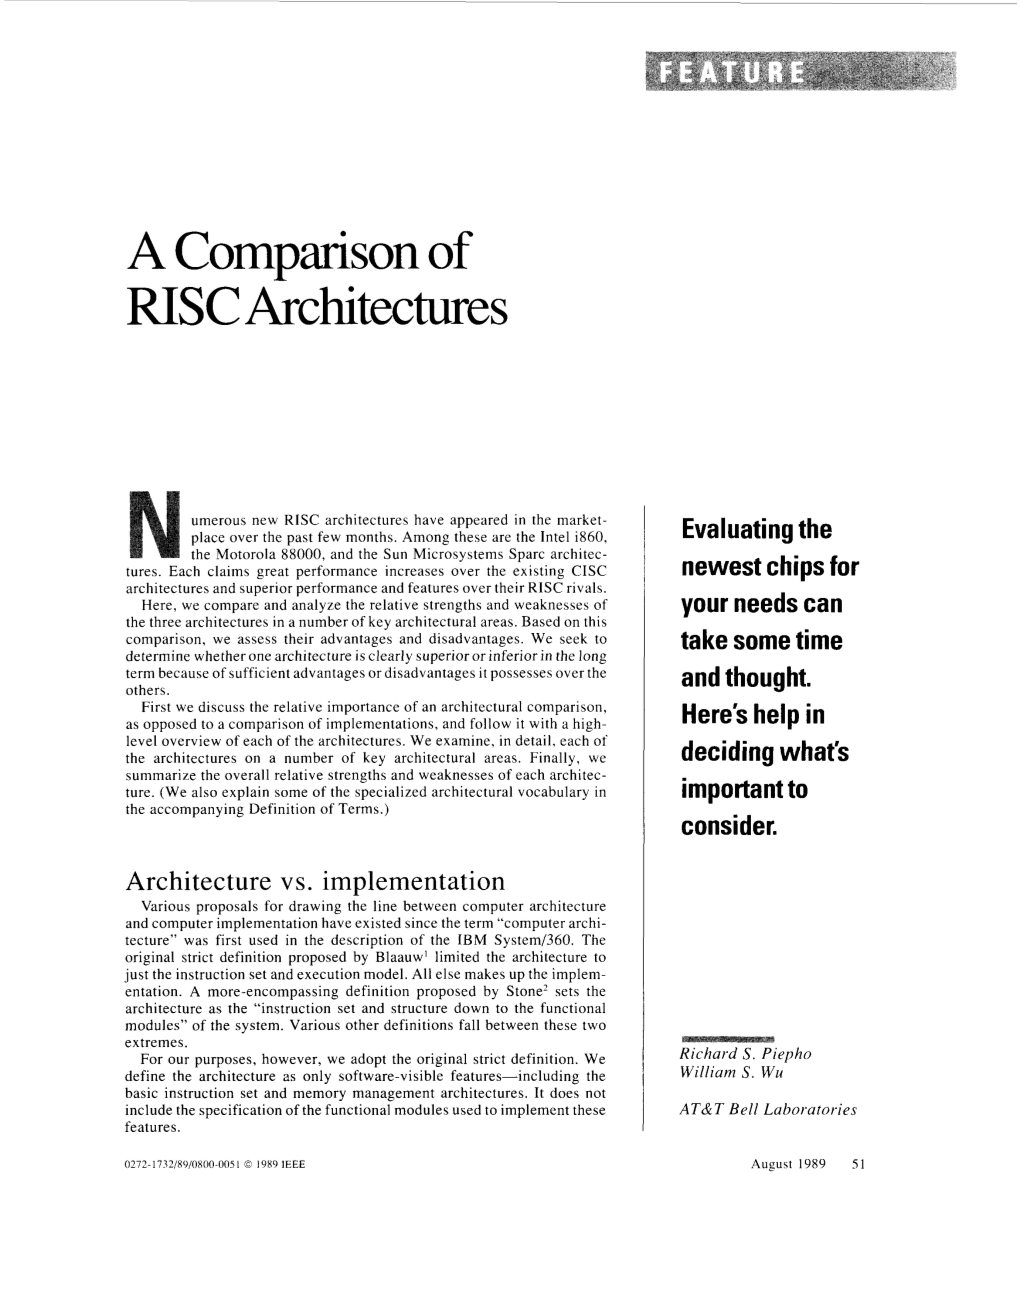 A Comparison of RISC Architectures